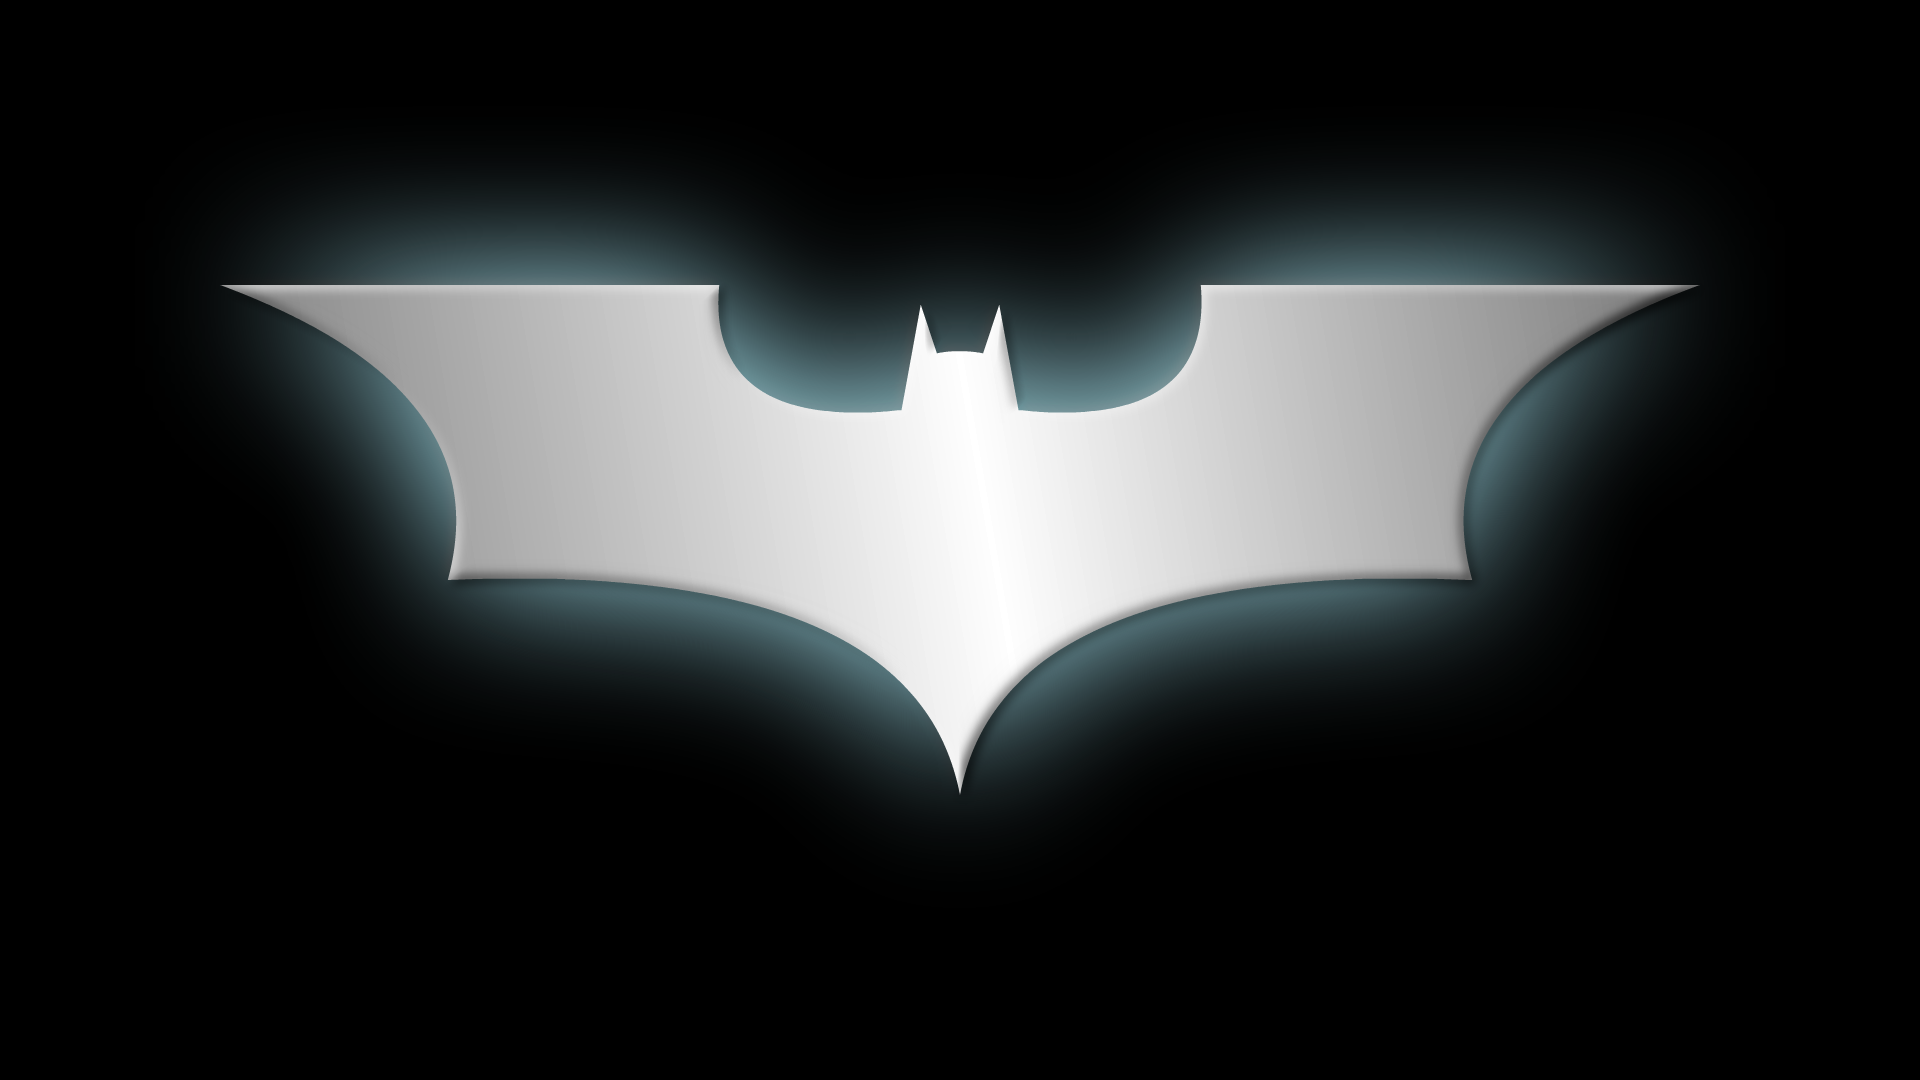 Dark Knight Symbol by Yurtigo on DeviantArt